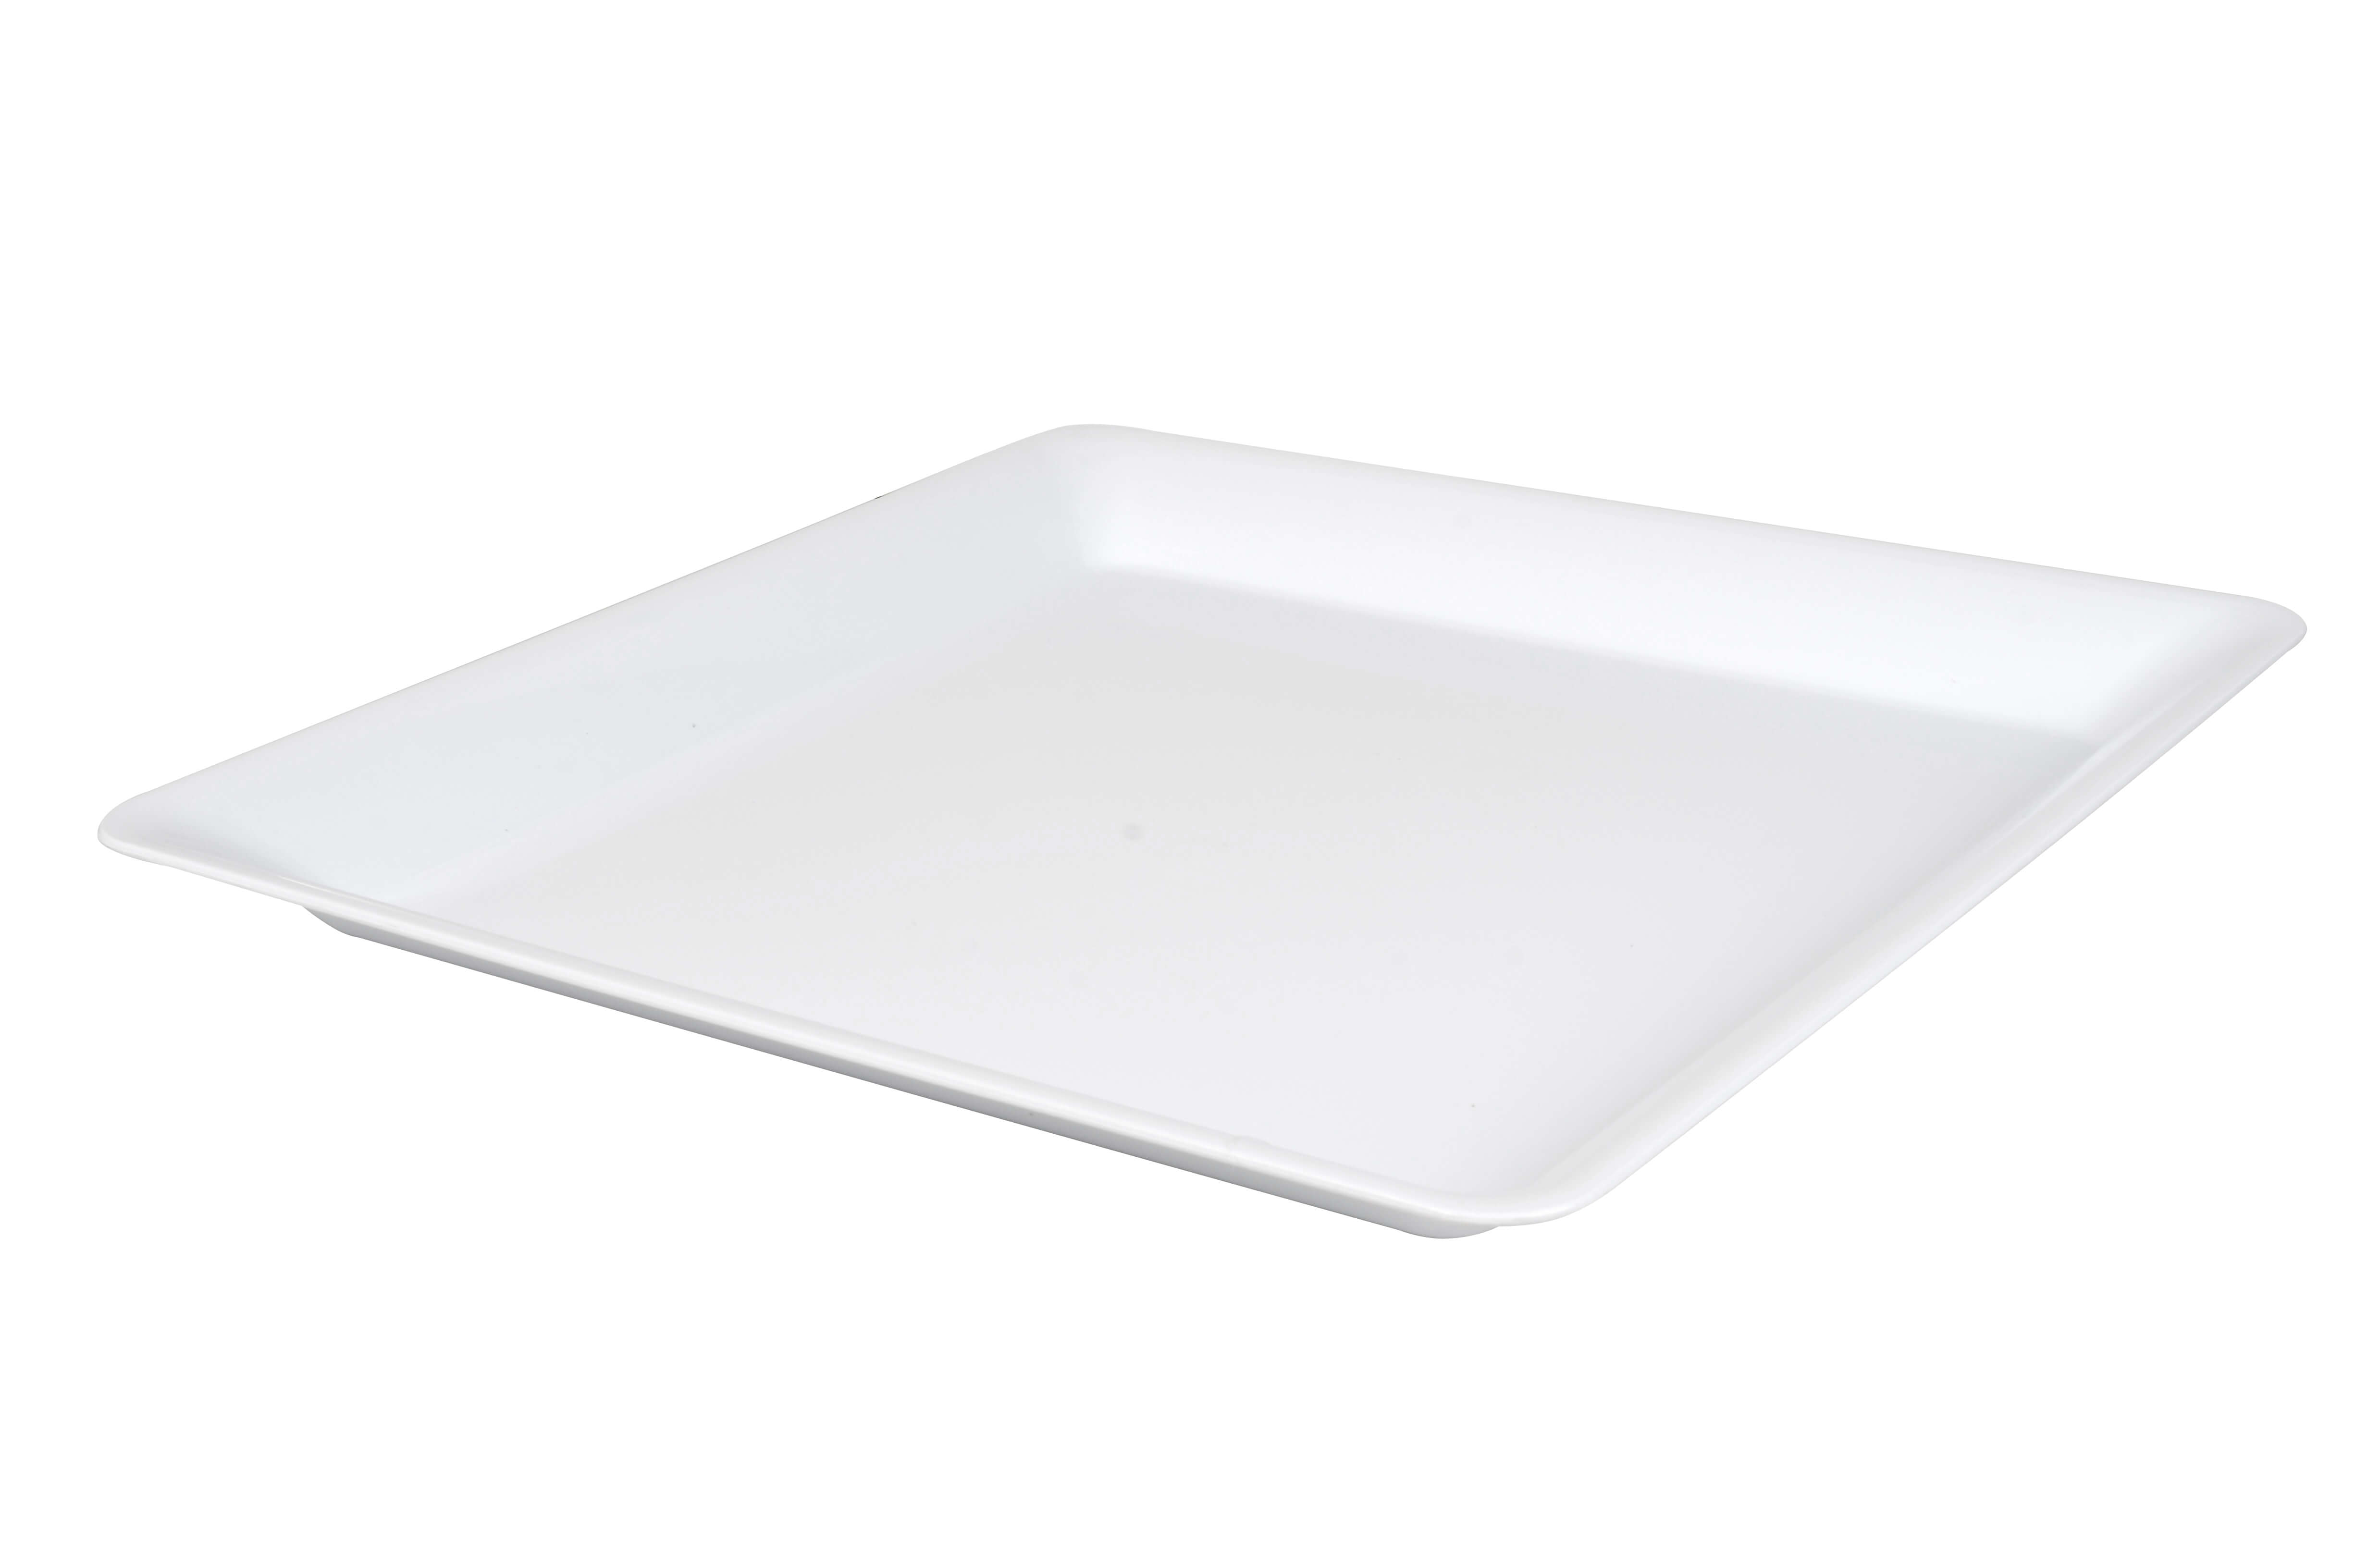 Ribbed Plastic Display Tray 12.5 x 24 x 0.75 High, White 